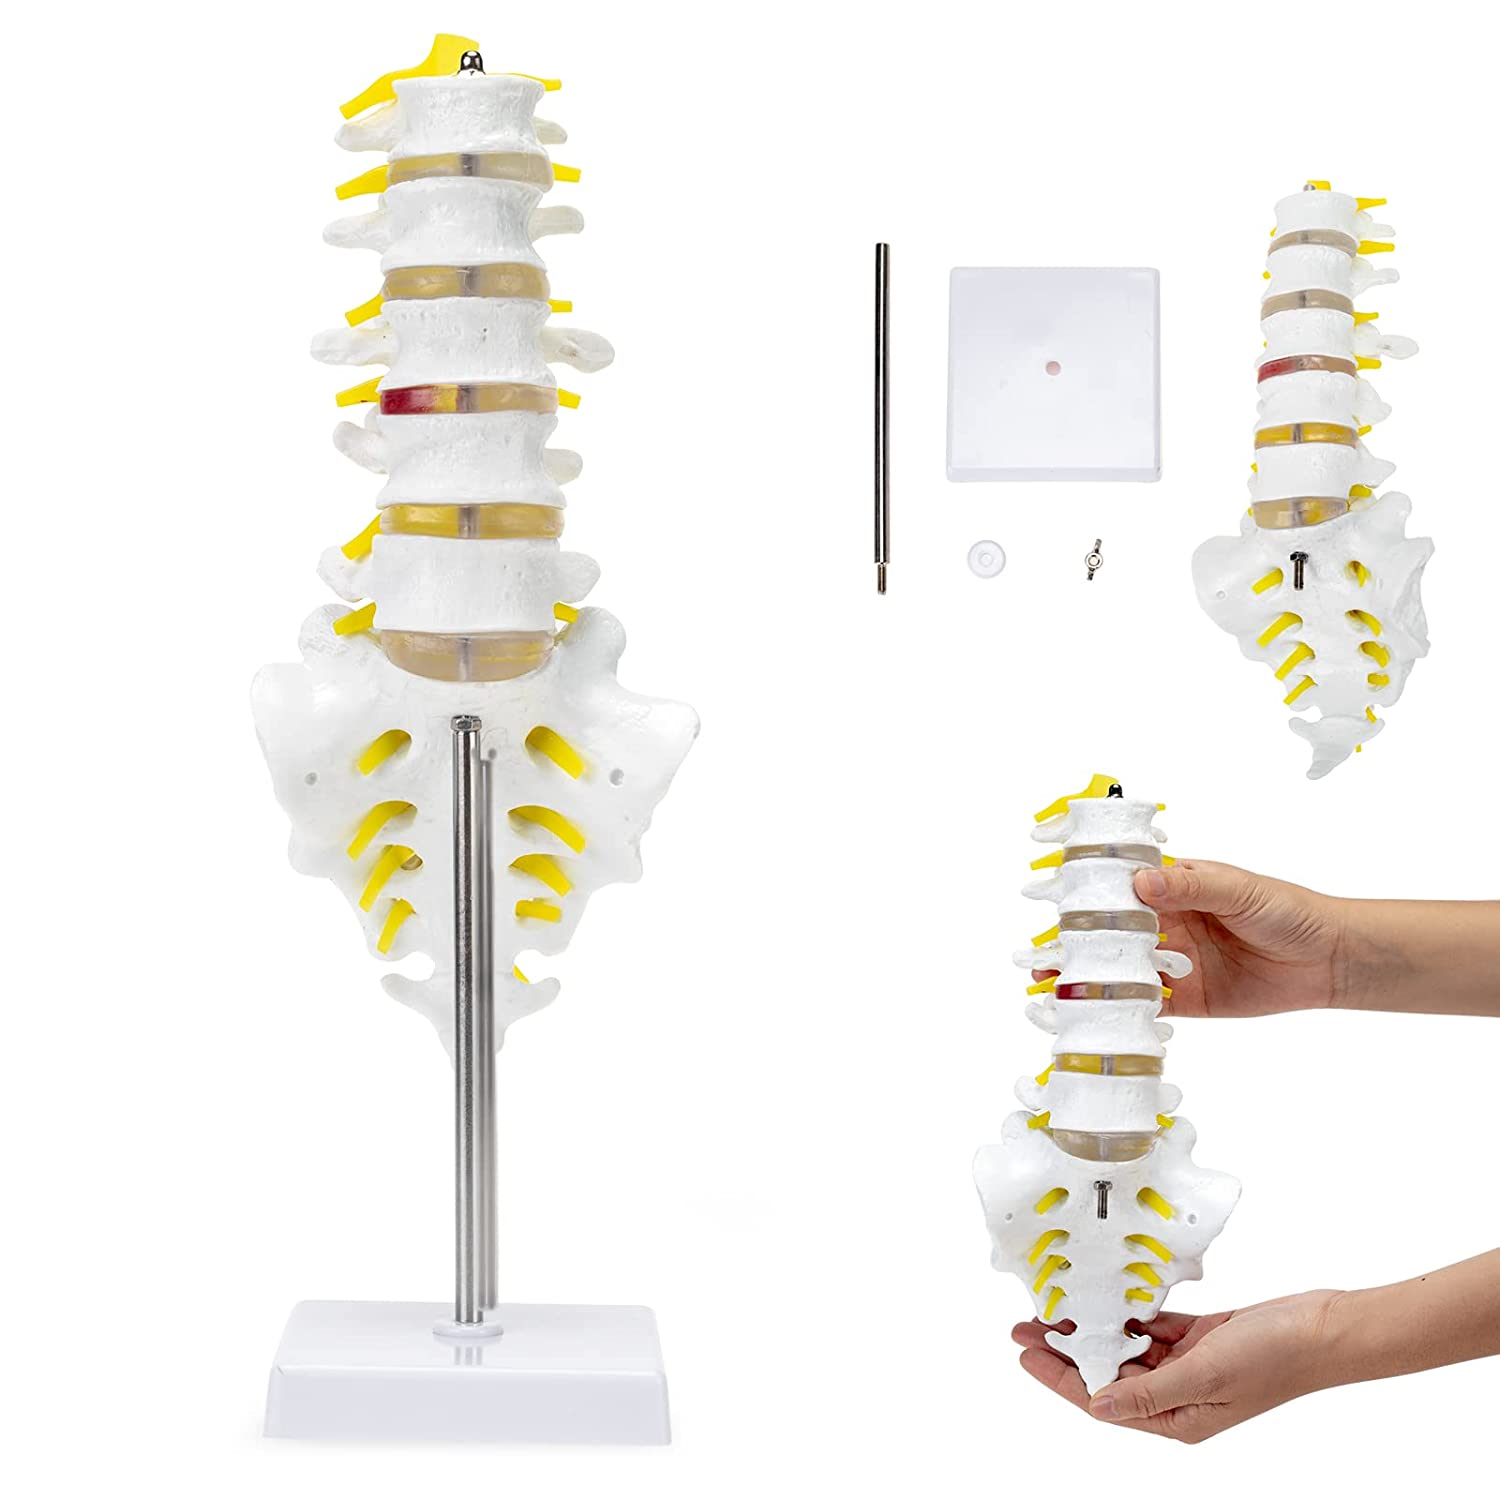 RONTEN Lumbar Spine Model Lumbosacral Segment Model with A Herniated Disc